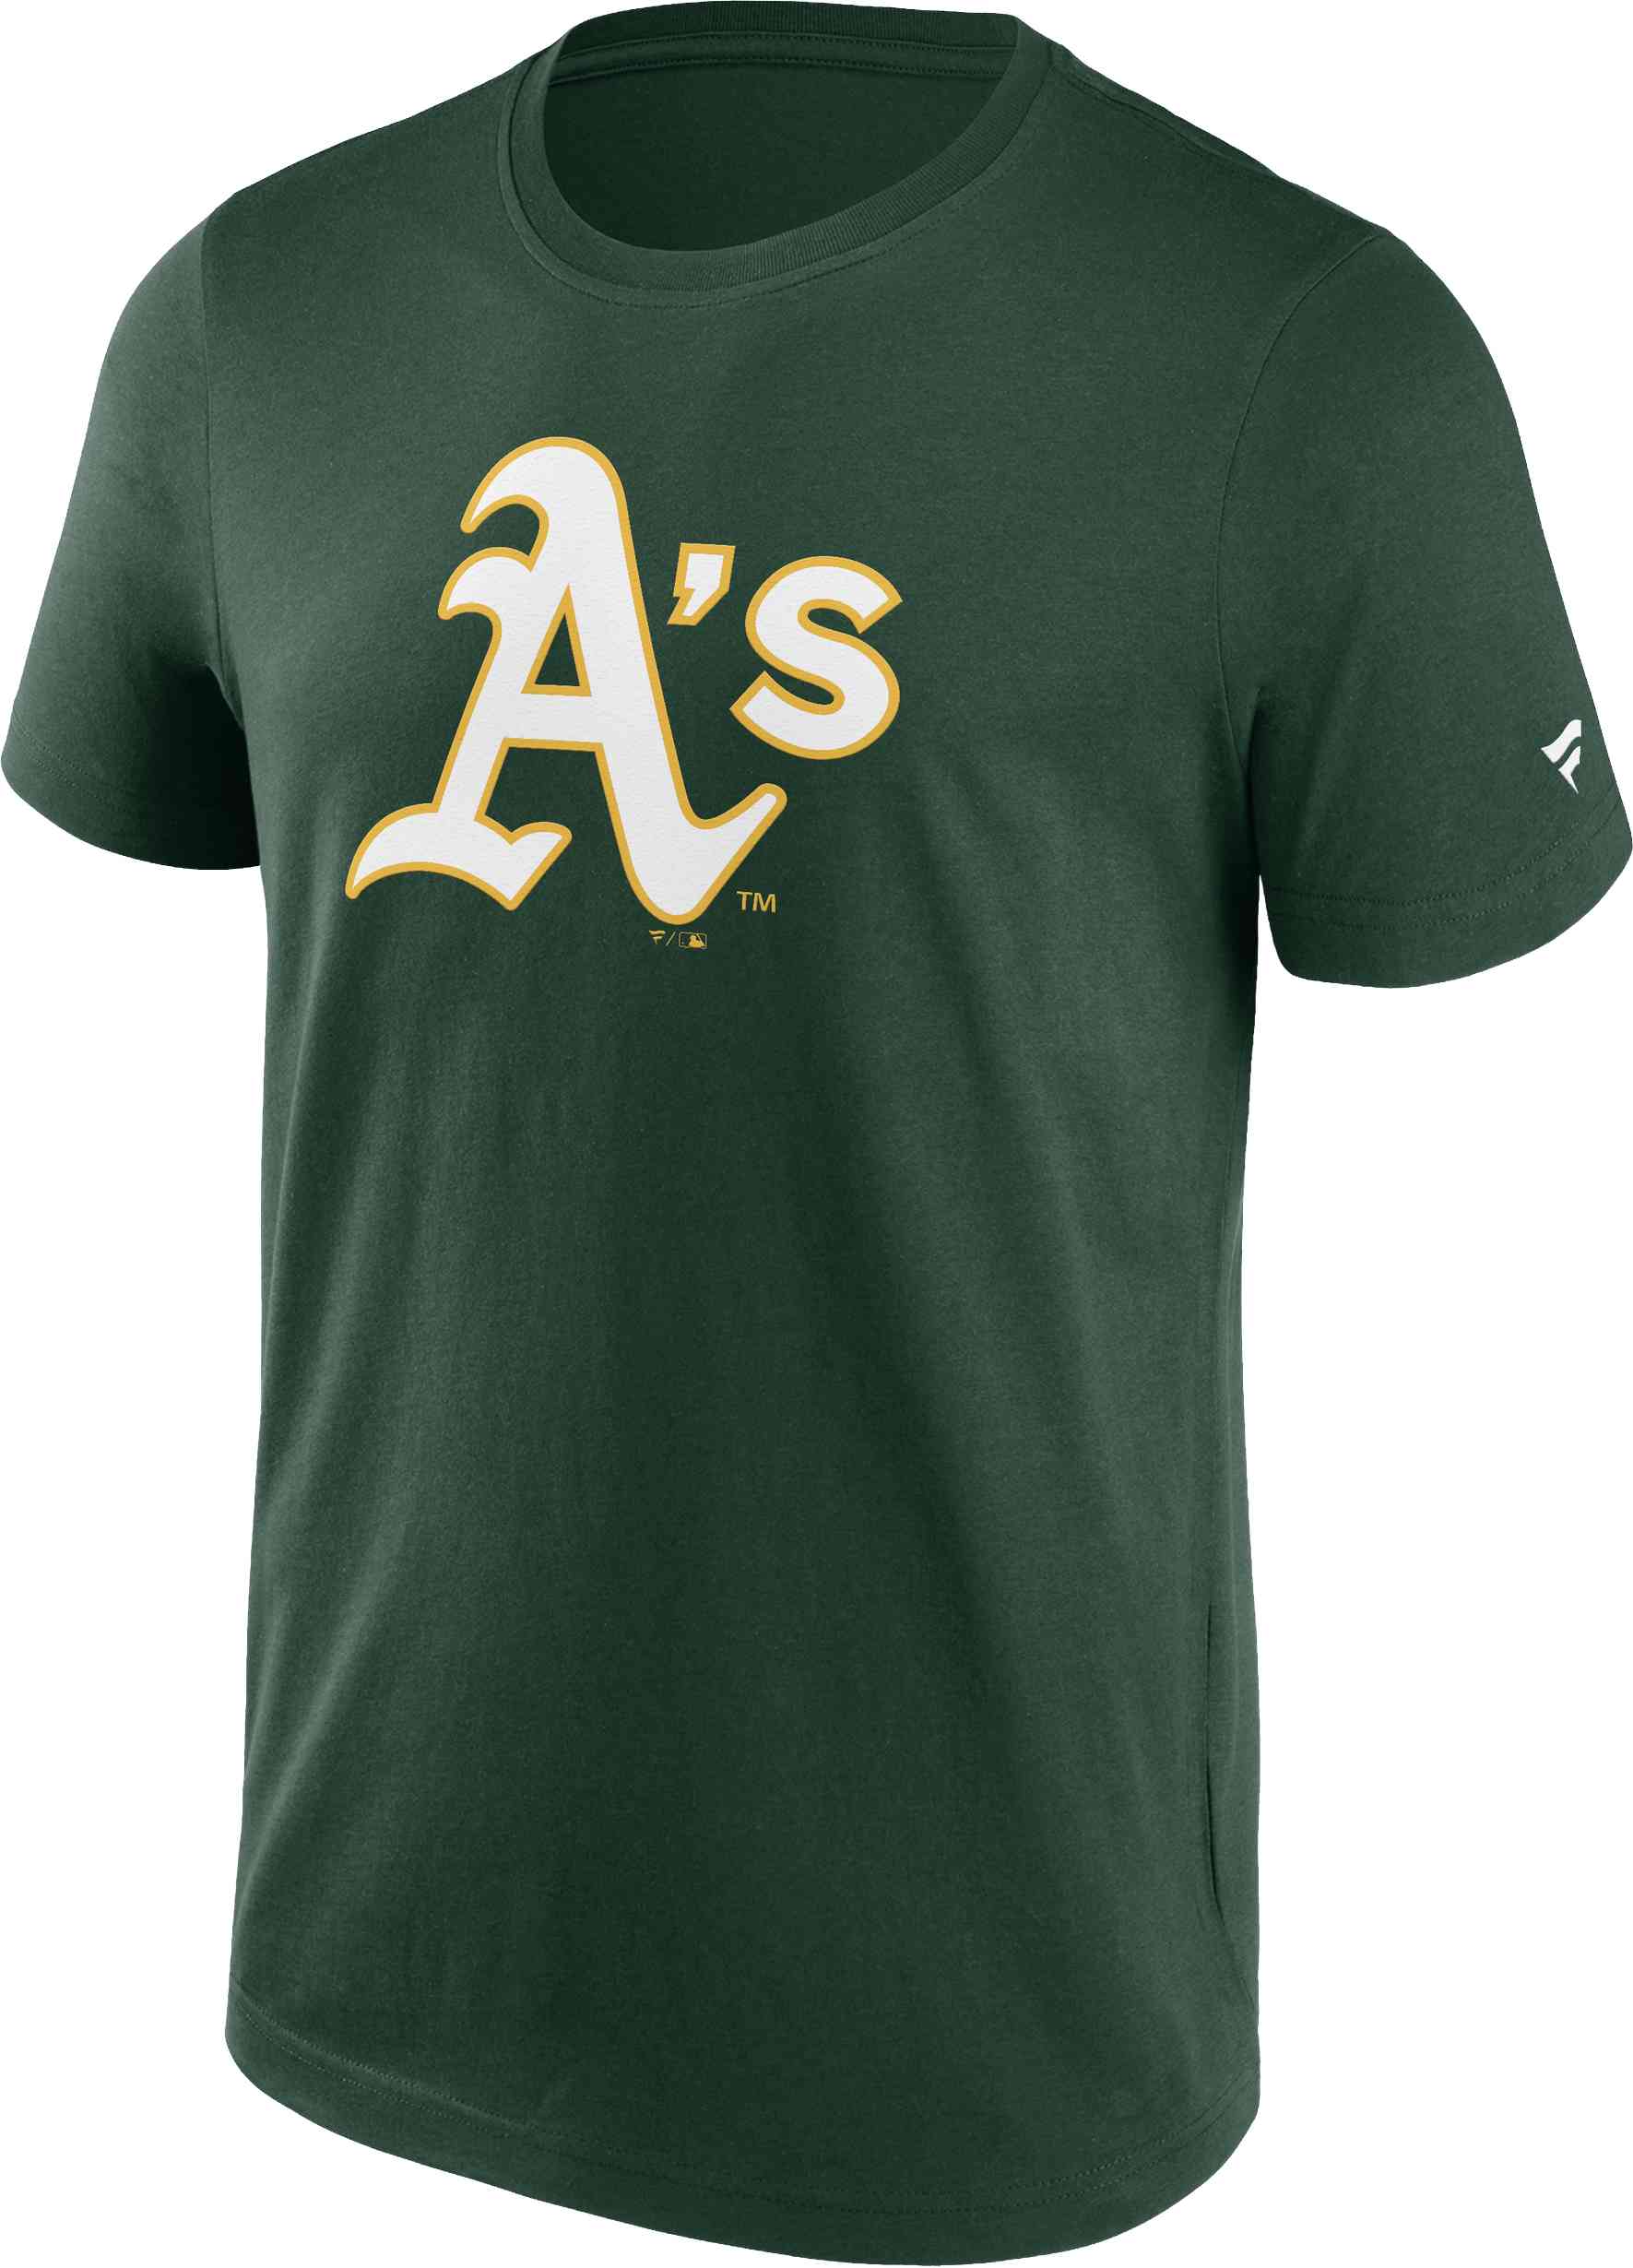 Fanatics - MLB Oakland Athletics Primary Logo Graphic T-Shirt